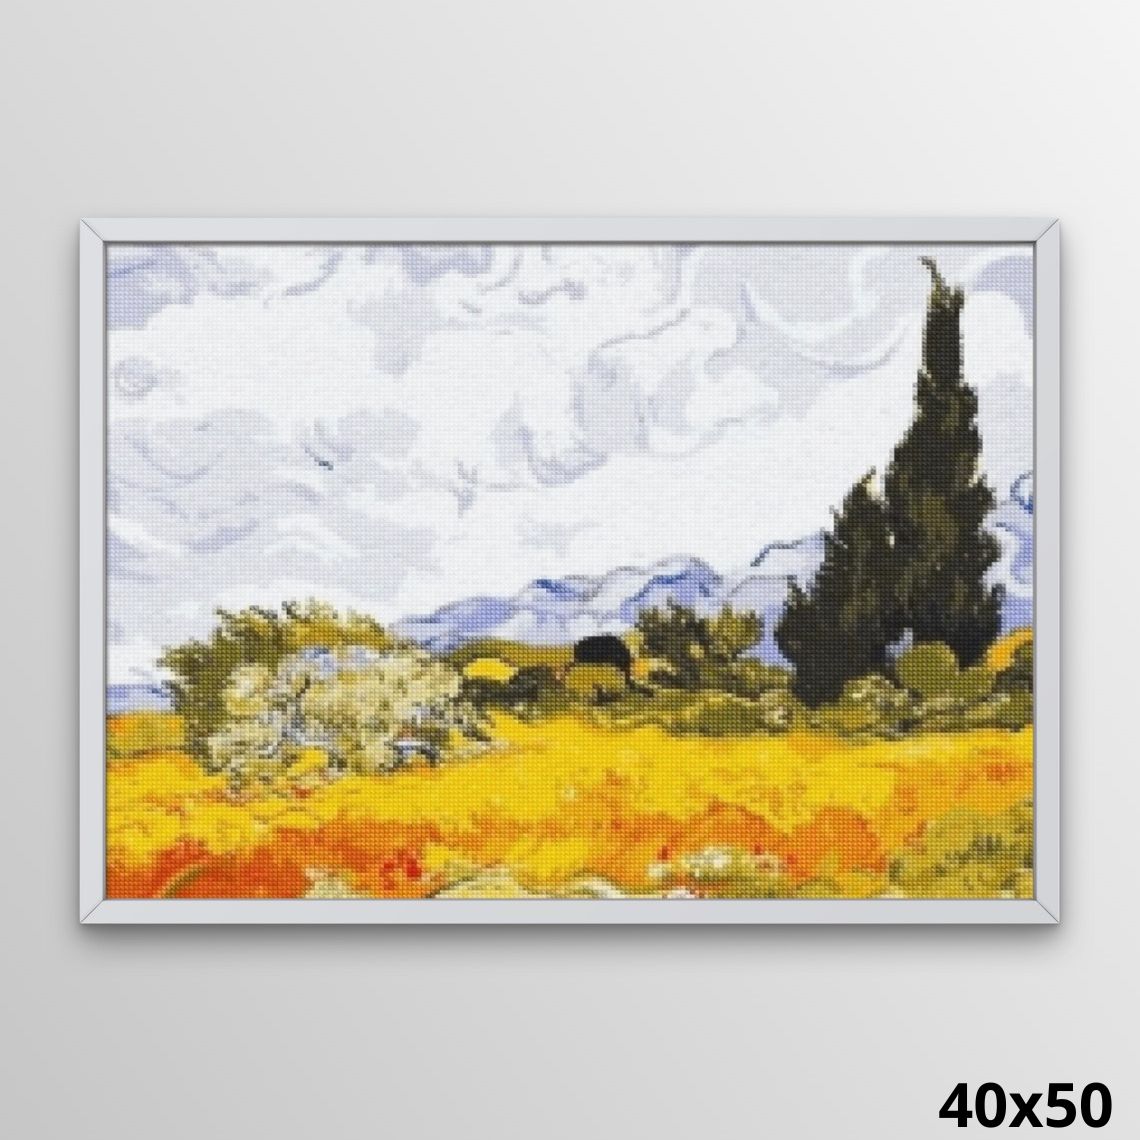 Van Gogh Wheat Field with Cypresses 40x50 Diamond Art